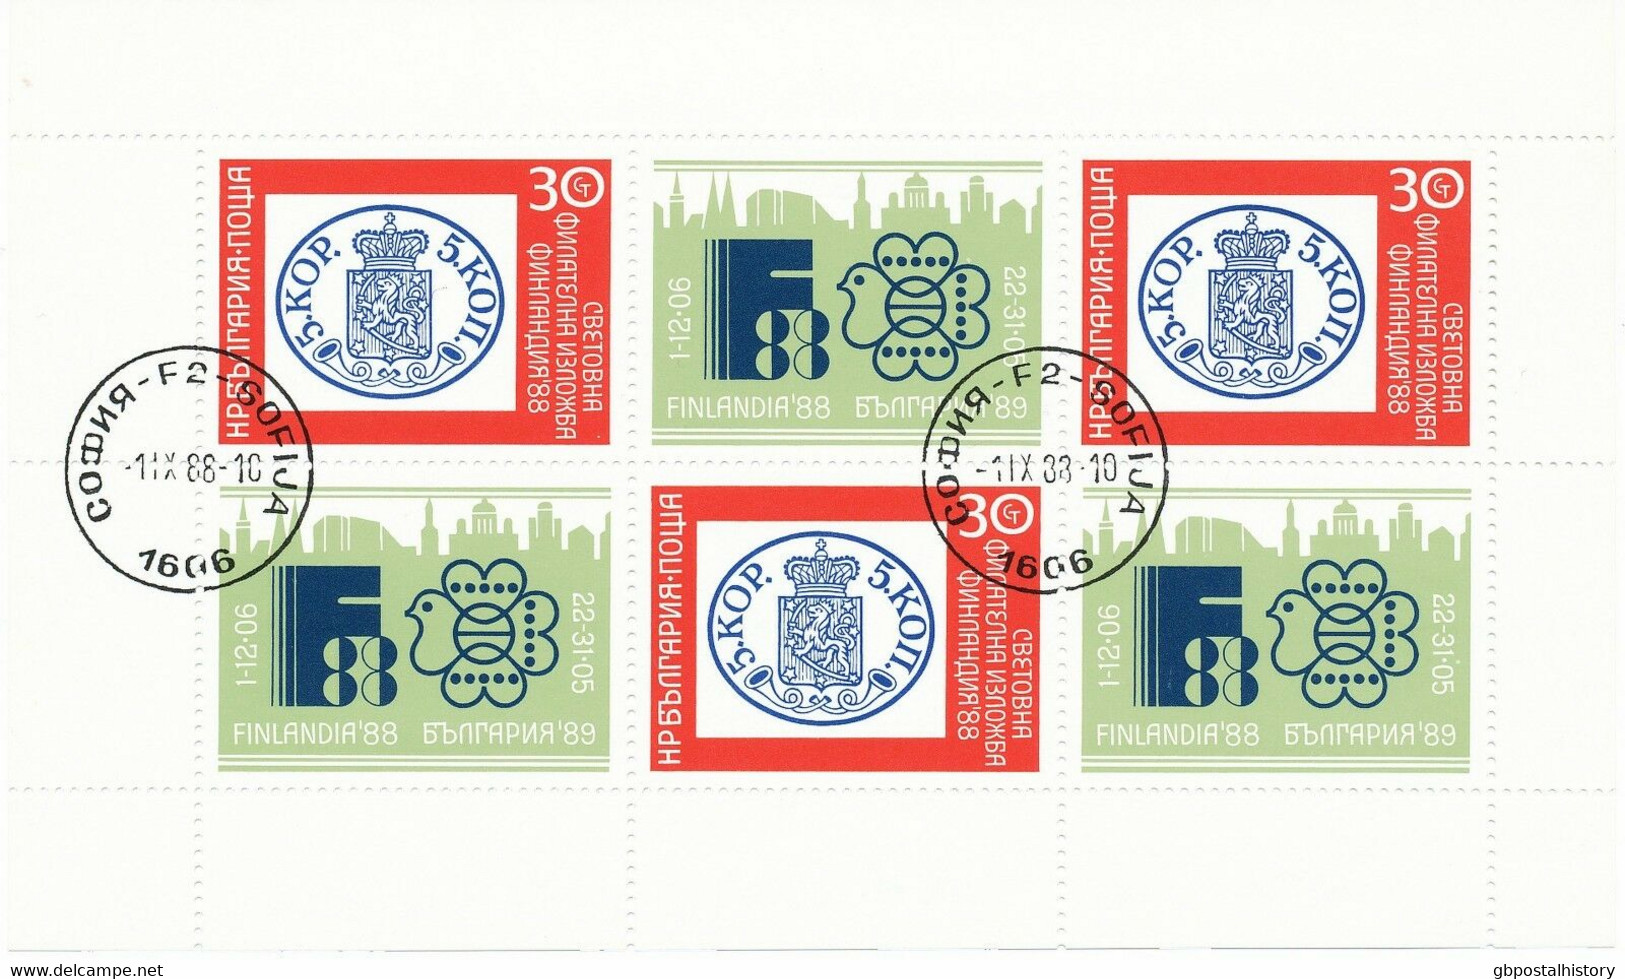 BULGARIEN 1988 Internationale Briefmarkenausstellung FINLANDIA’88 Helsinki ABART - Errors, Freaks & Oddities (EFO)